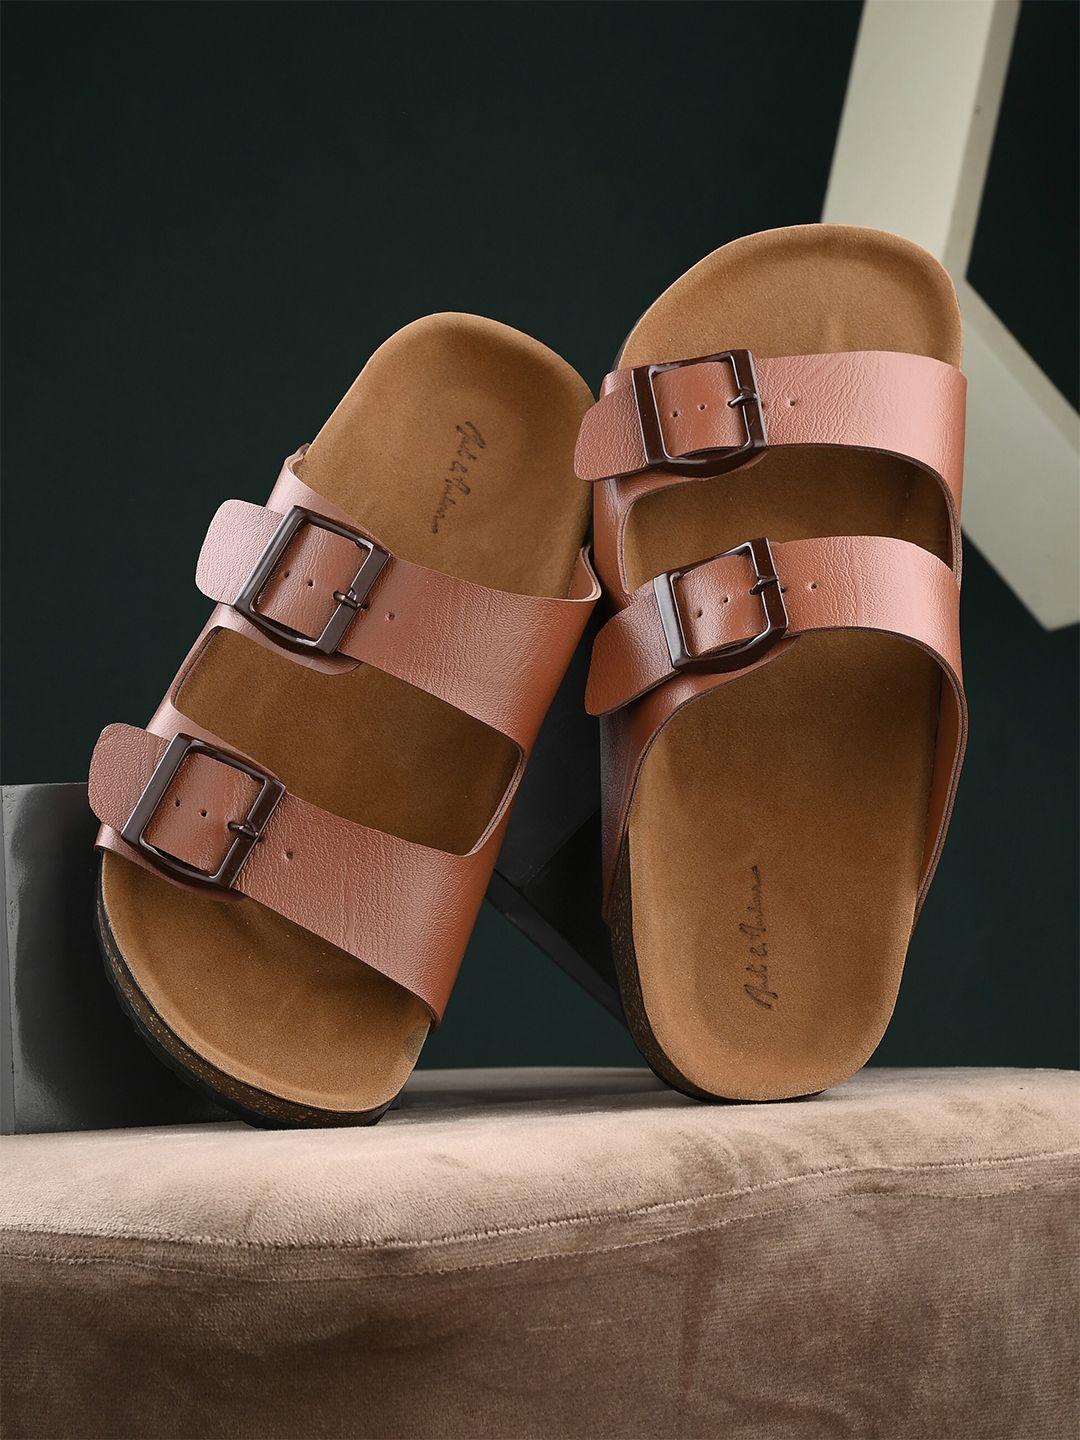 mast & harbour tan slip-on comfort sandals